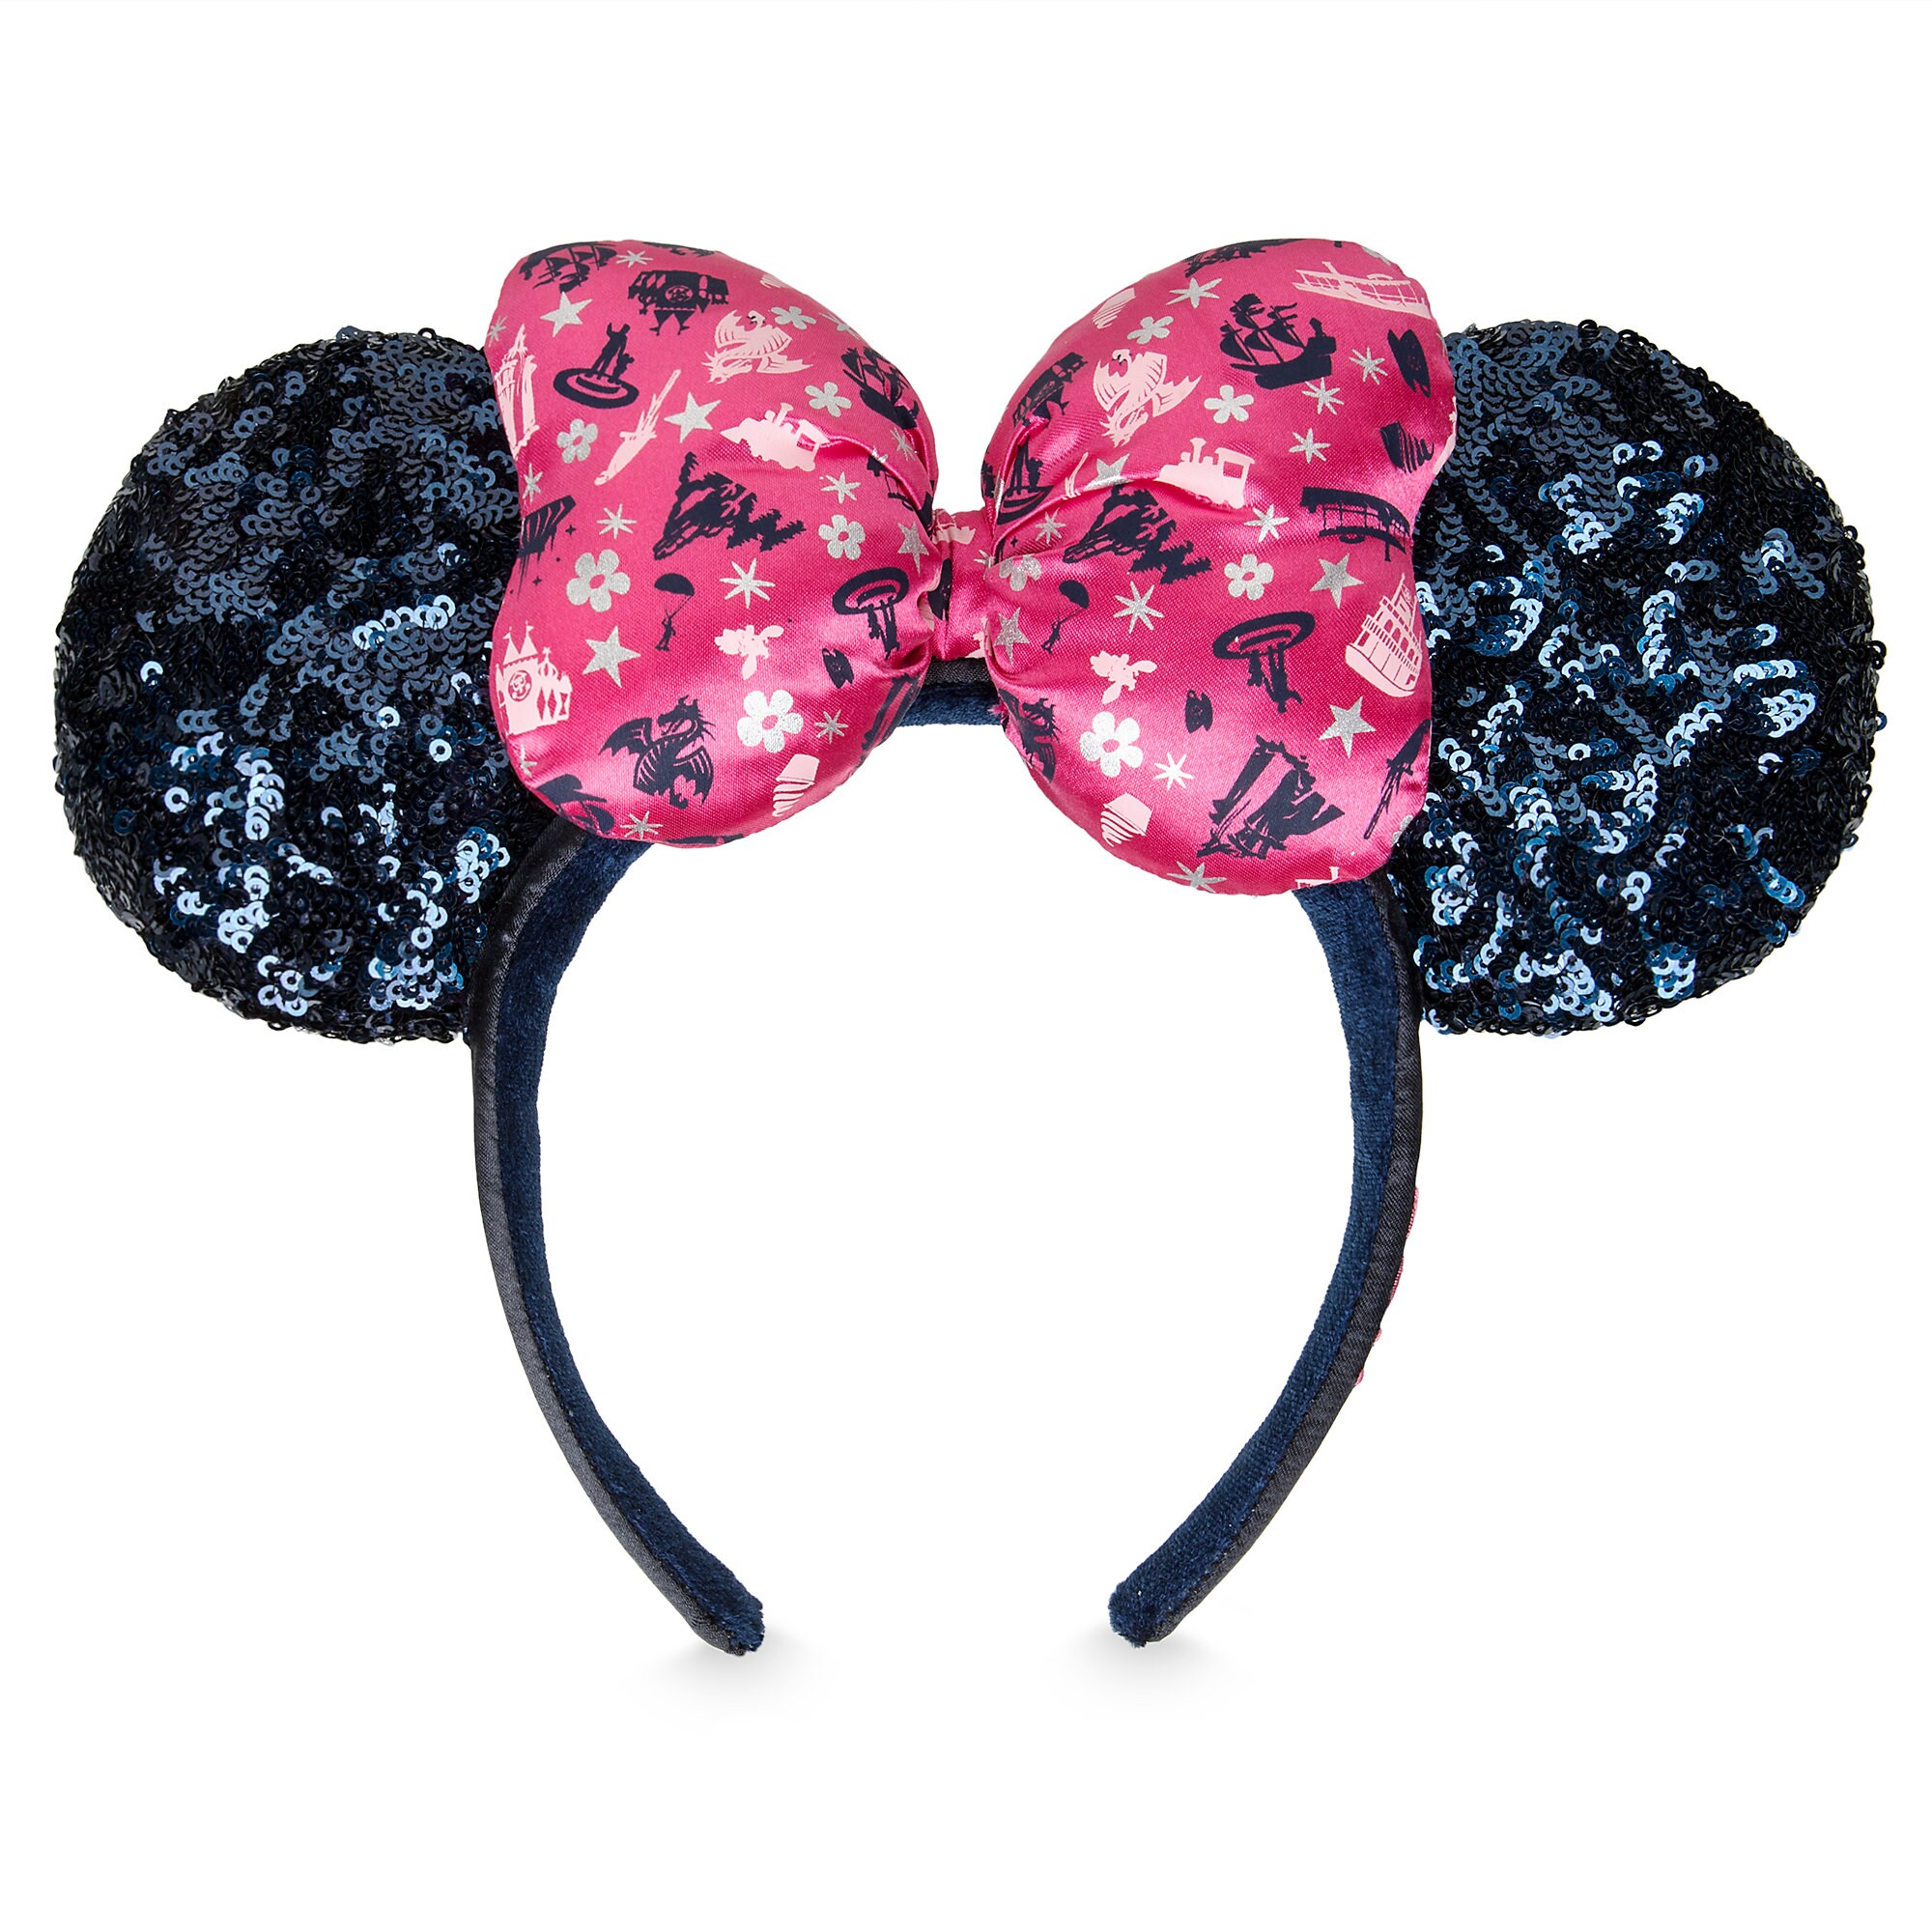 Minnie Mouse Sequined Ear Headband with Satin Bow - Disney Parks 2019